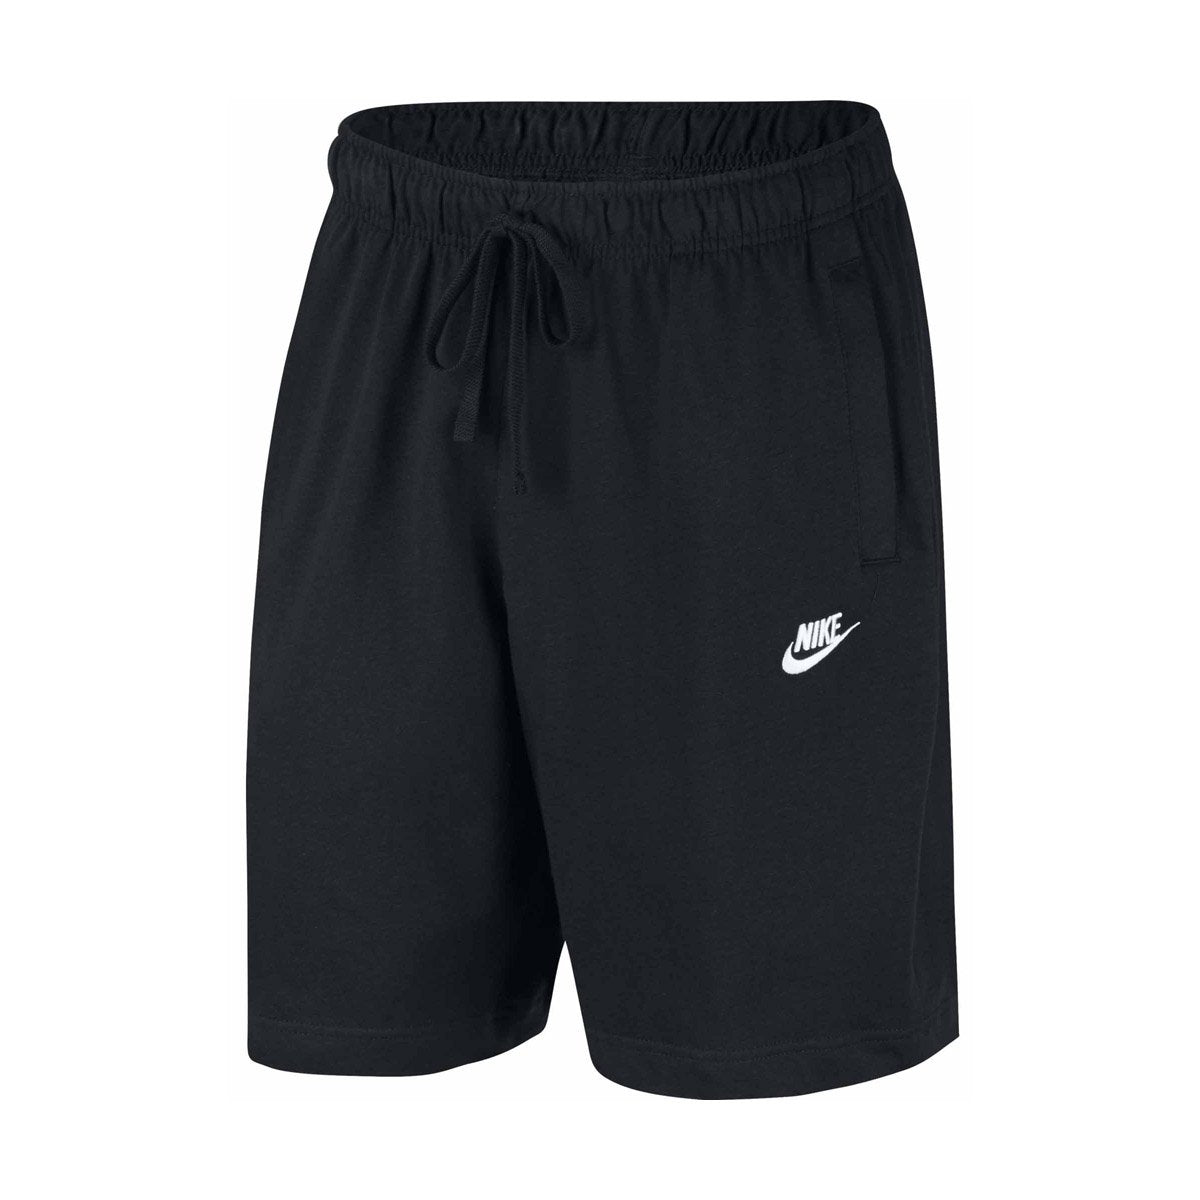 lebron 10 cheap white Men's Shorts